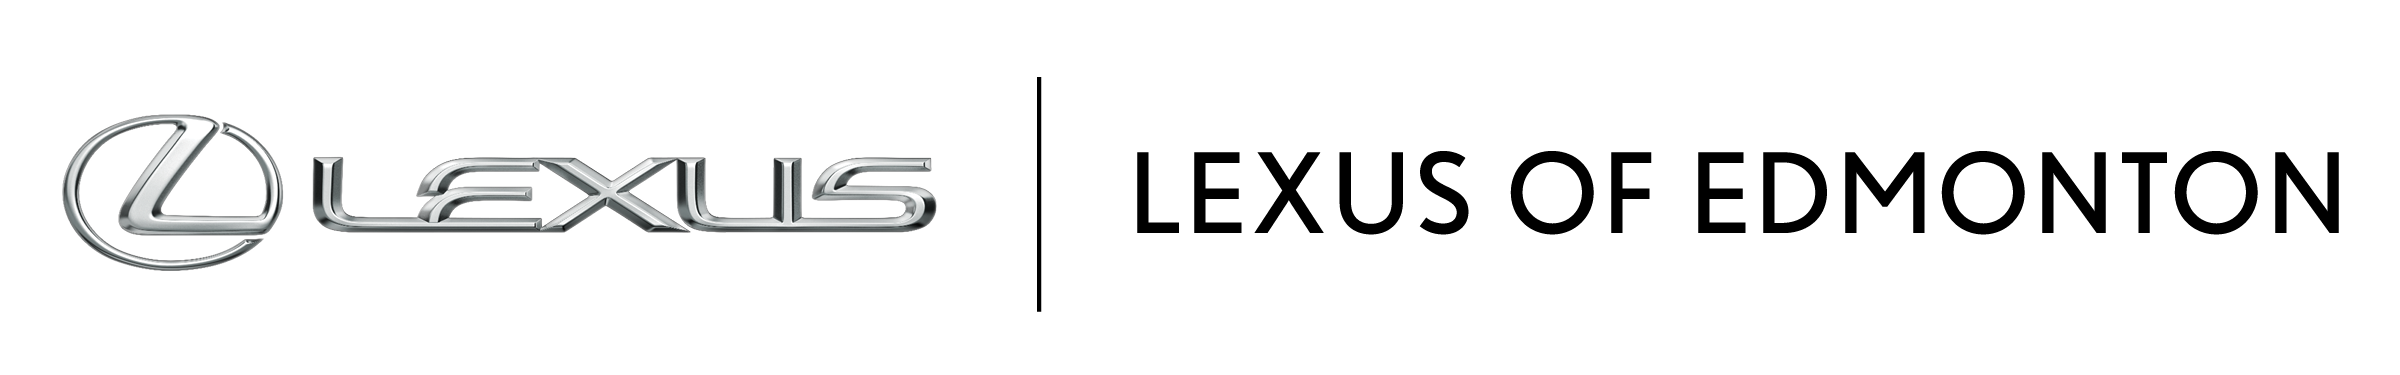 LEXUS OF EDMONTON Logo